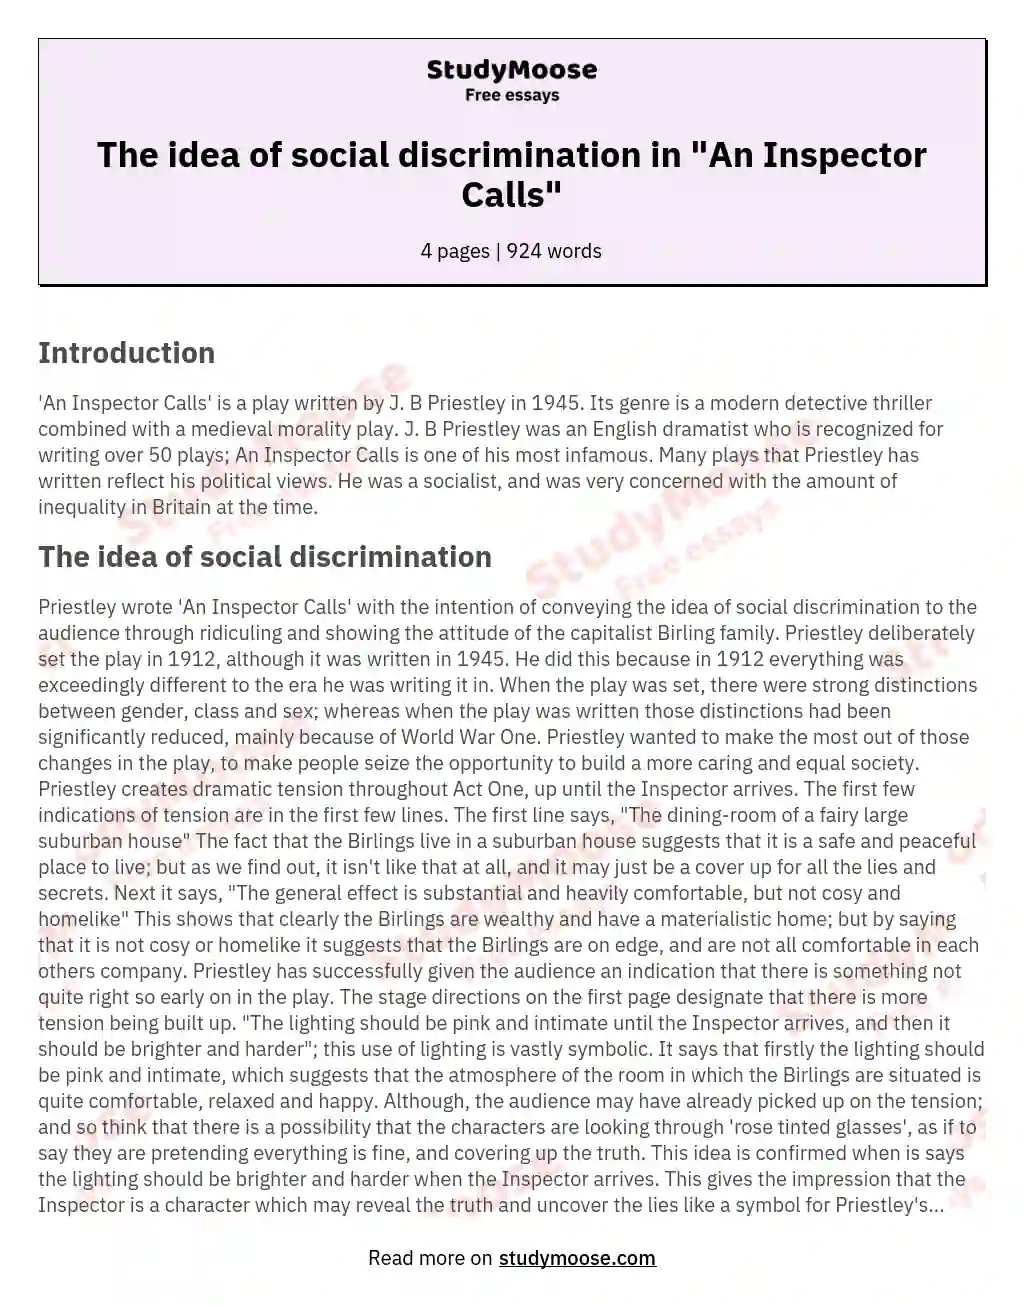 The idea of social discrimination in "An Inspector Calls" essay